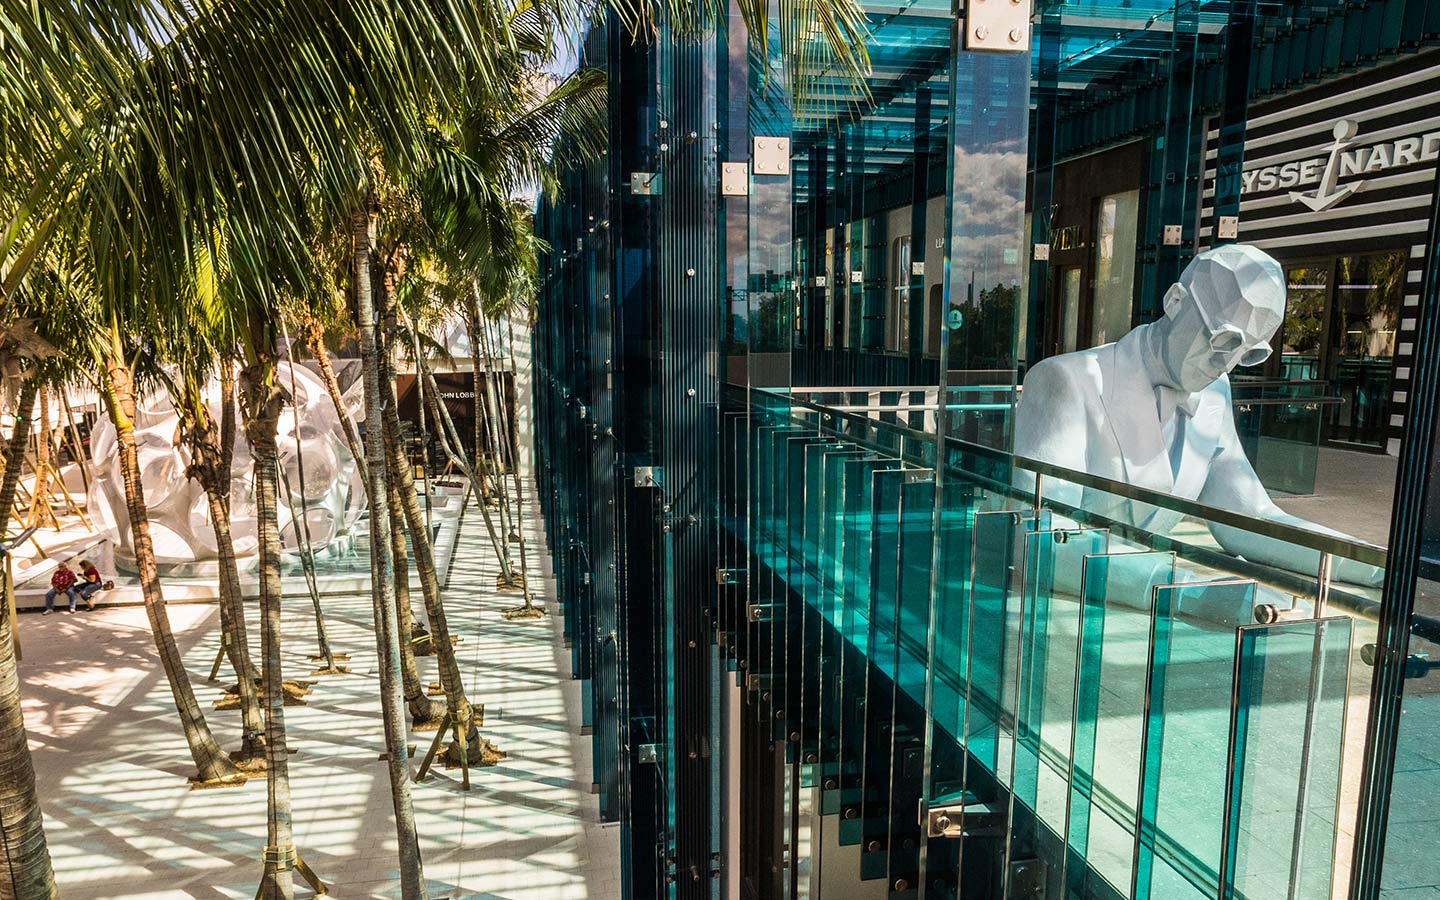 Ralph Lauren Opens Luxury Flagship in Miami Design District